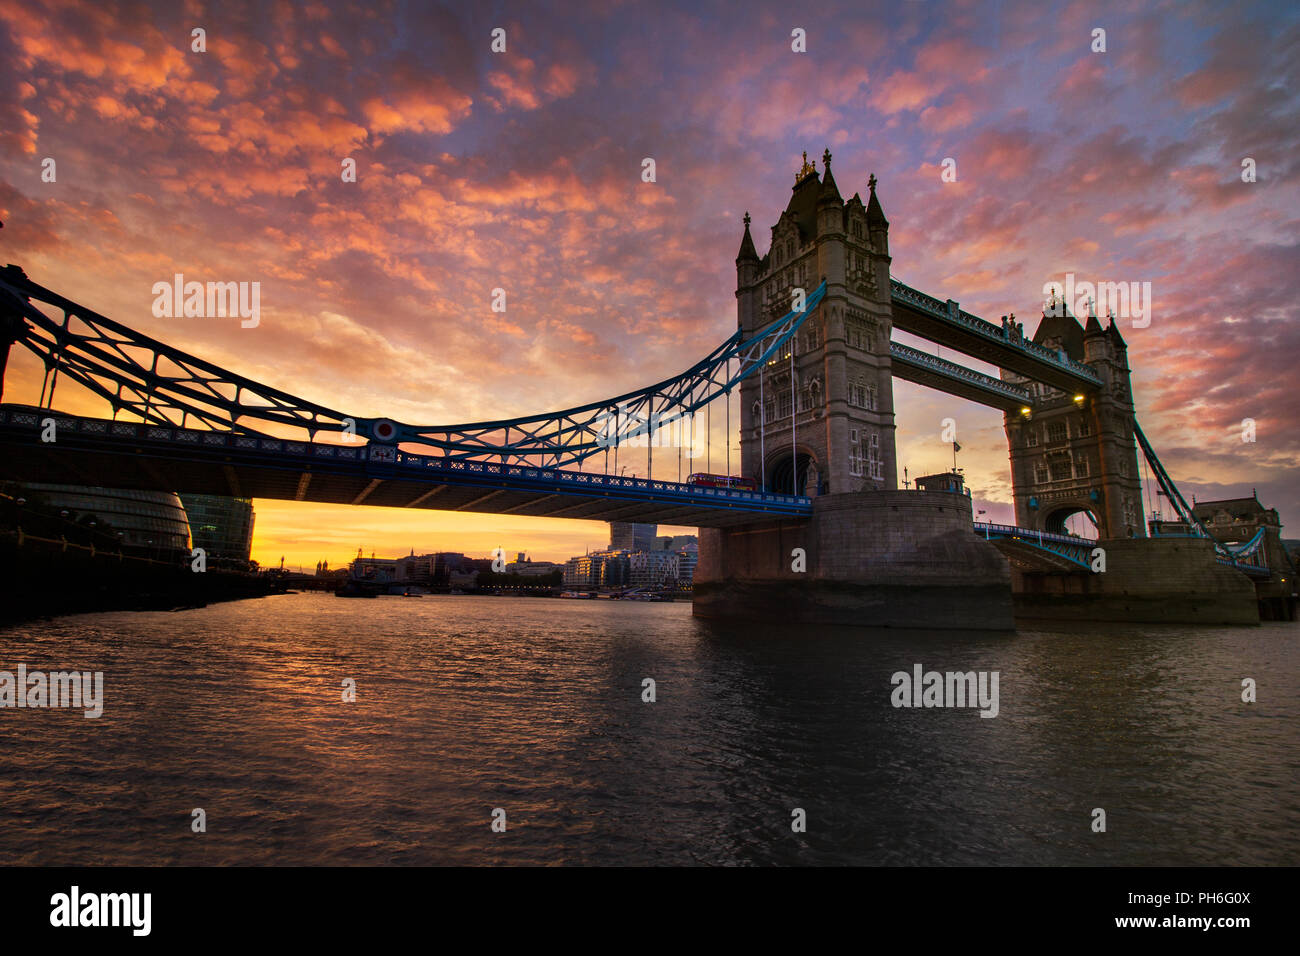 Tower Bridge at sunset, London, England Stock Photo